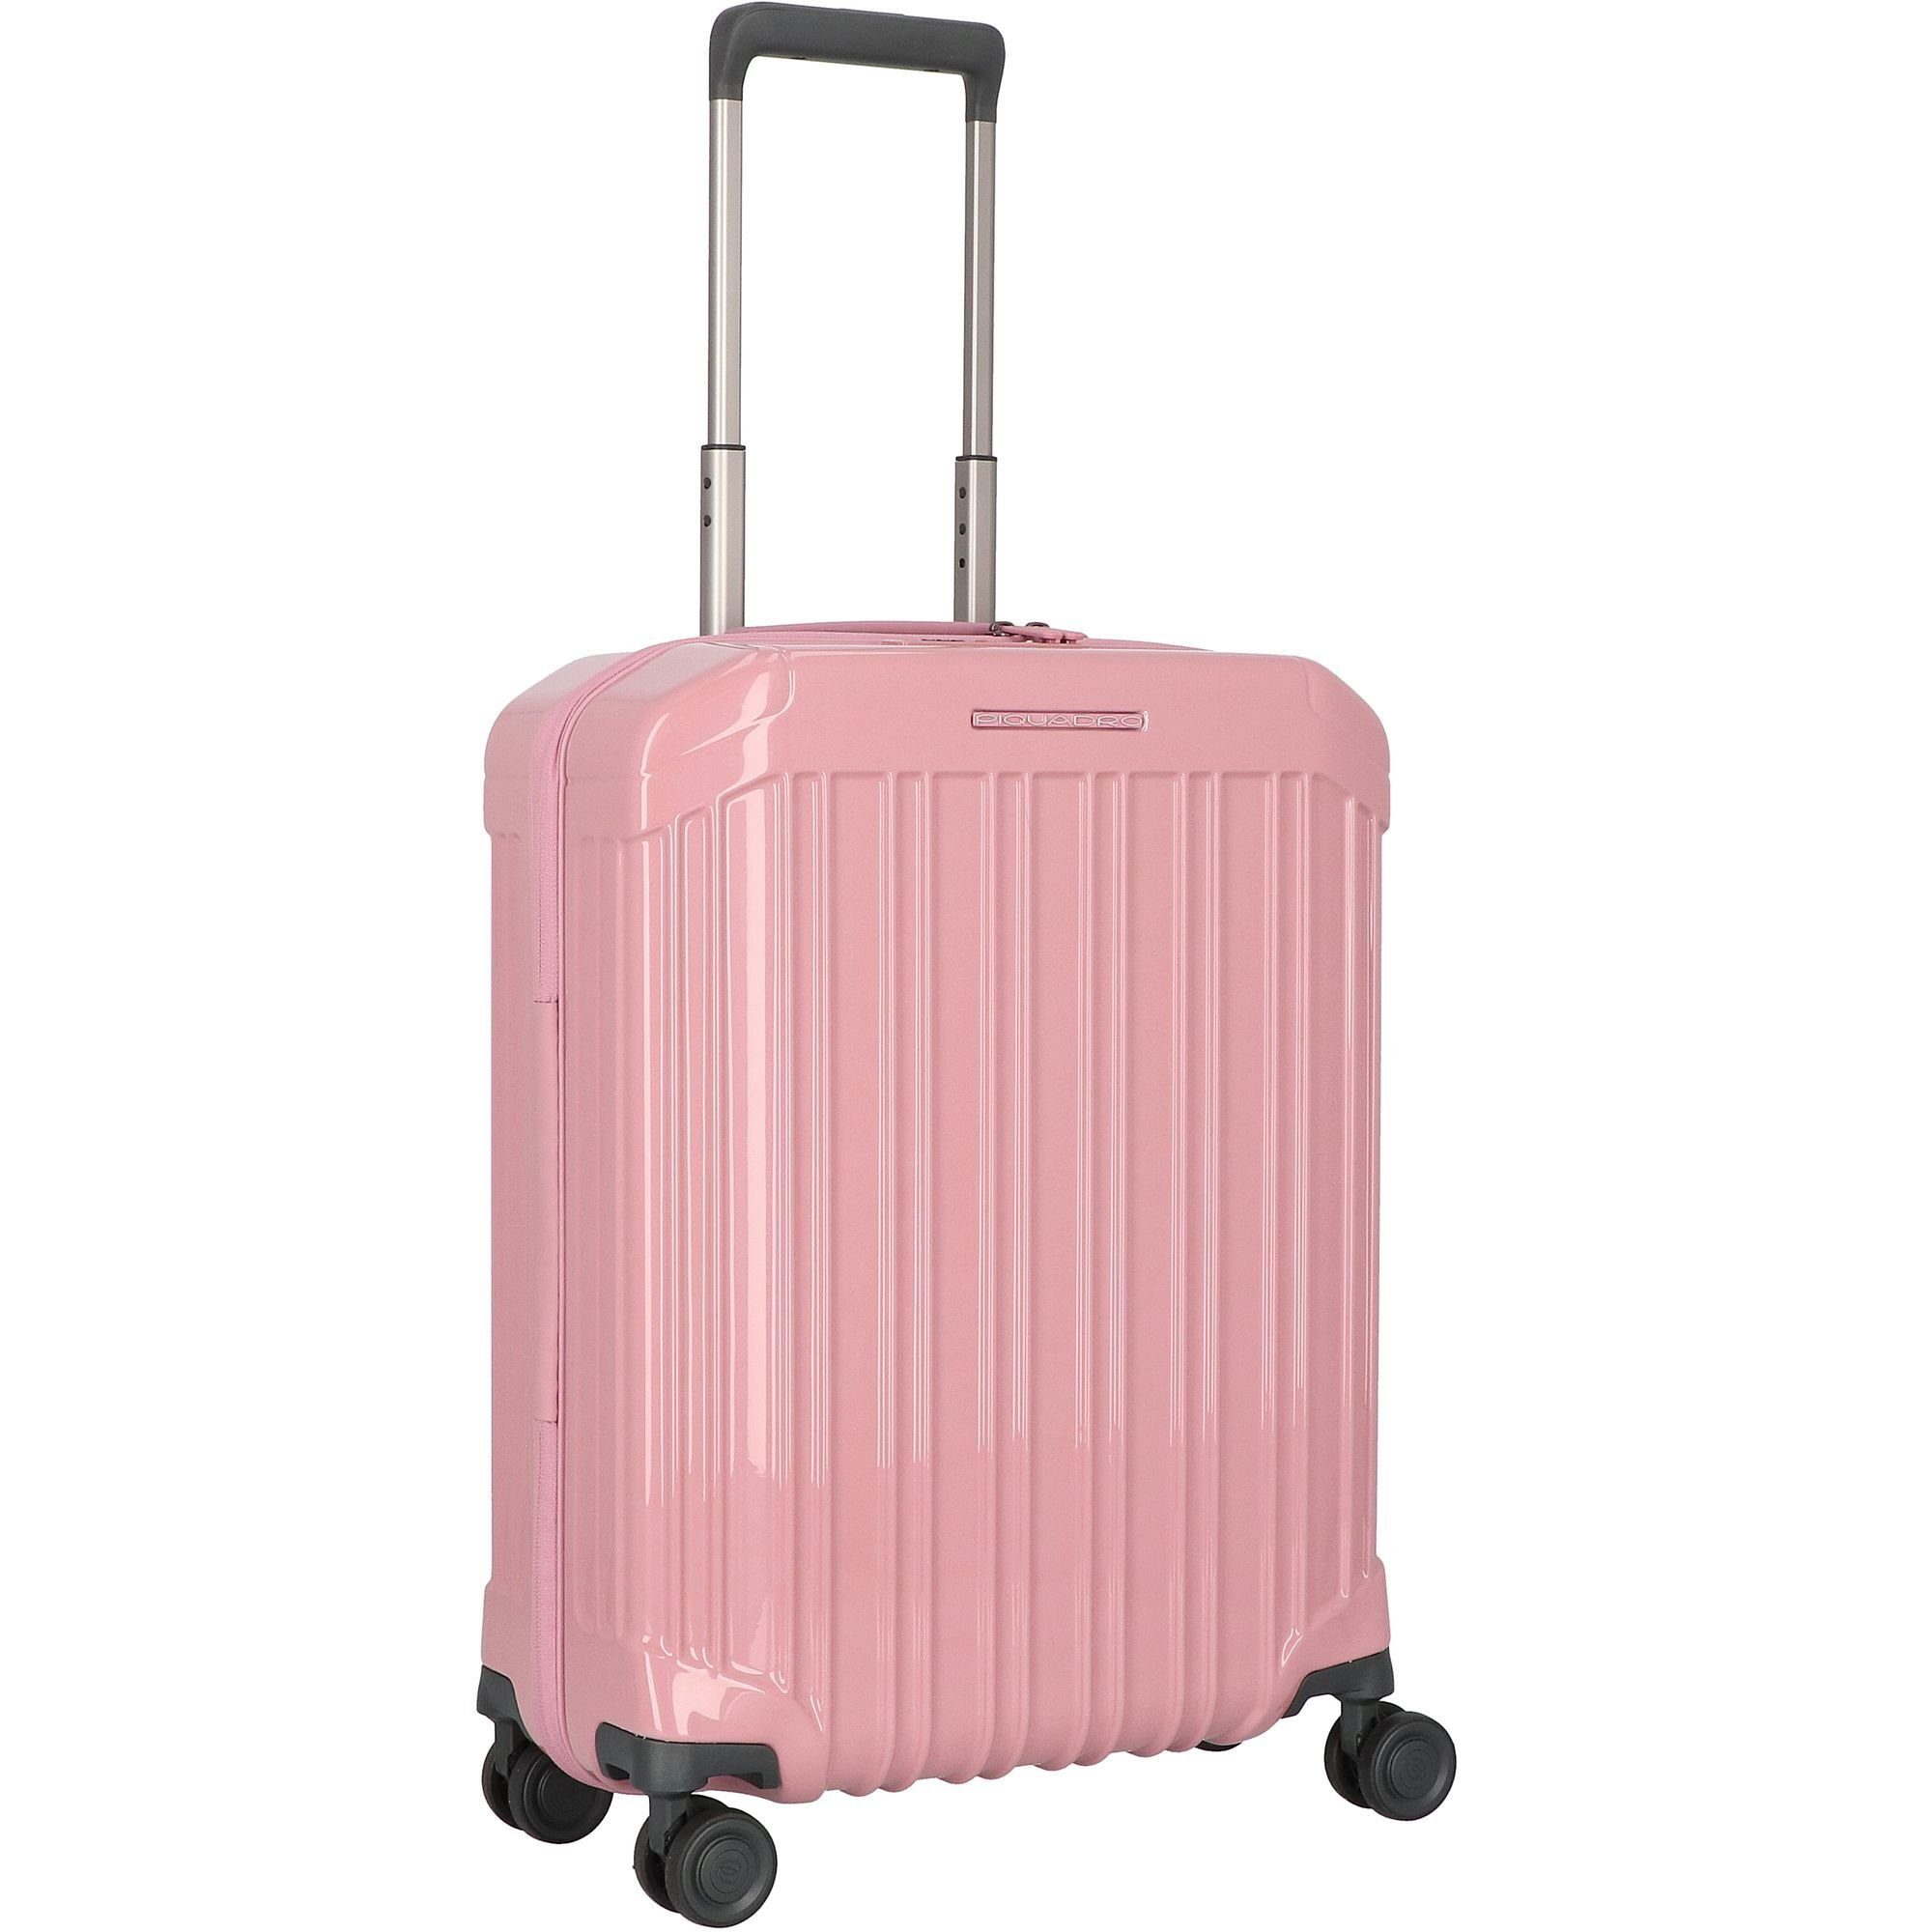 Polycarbonat pink Rollen, 4 Piquadro PQ-Light, Handgepäck-Trolley